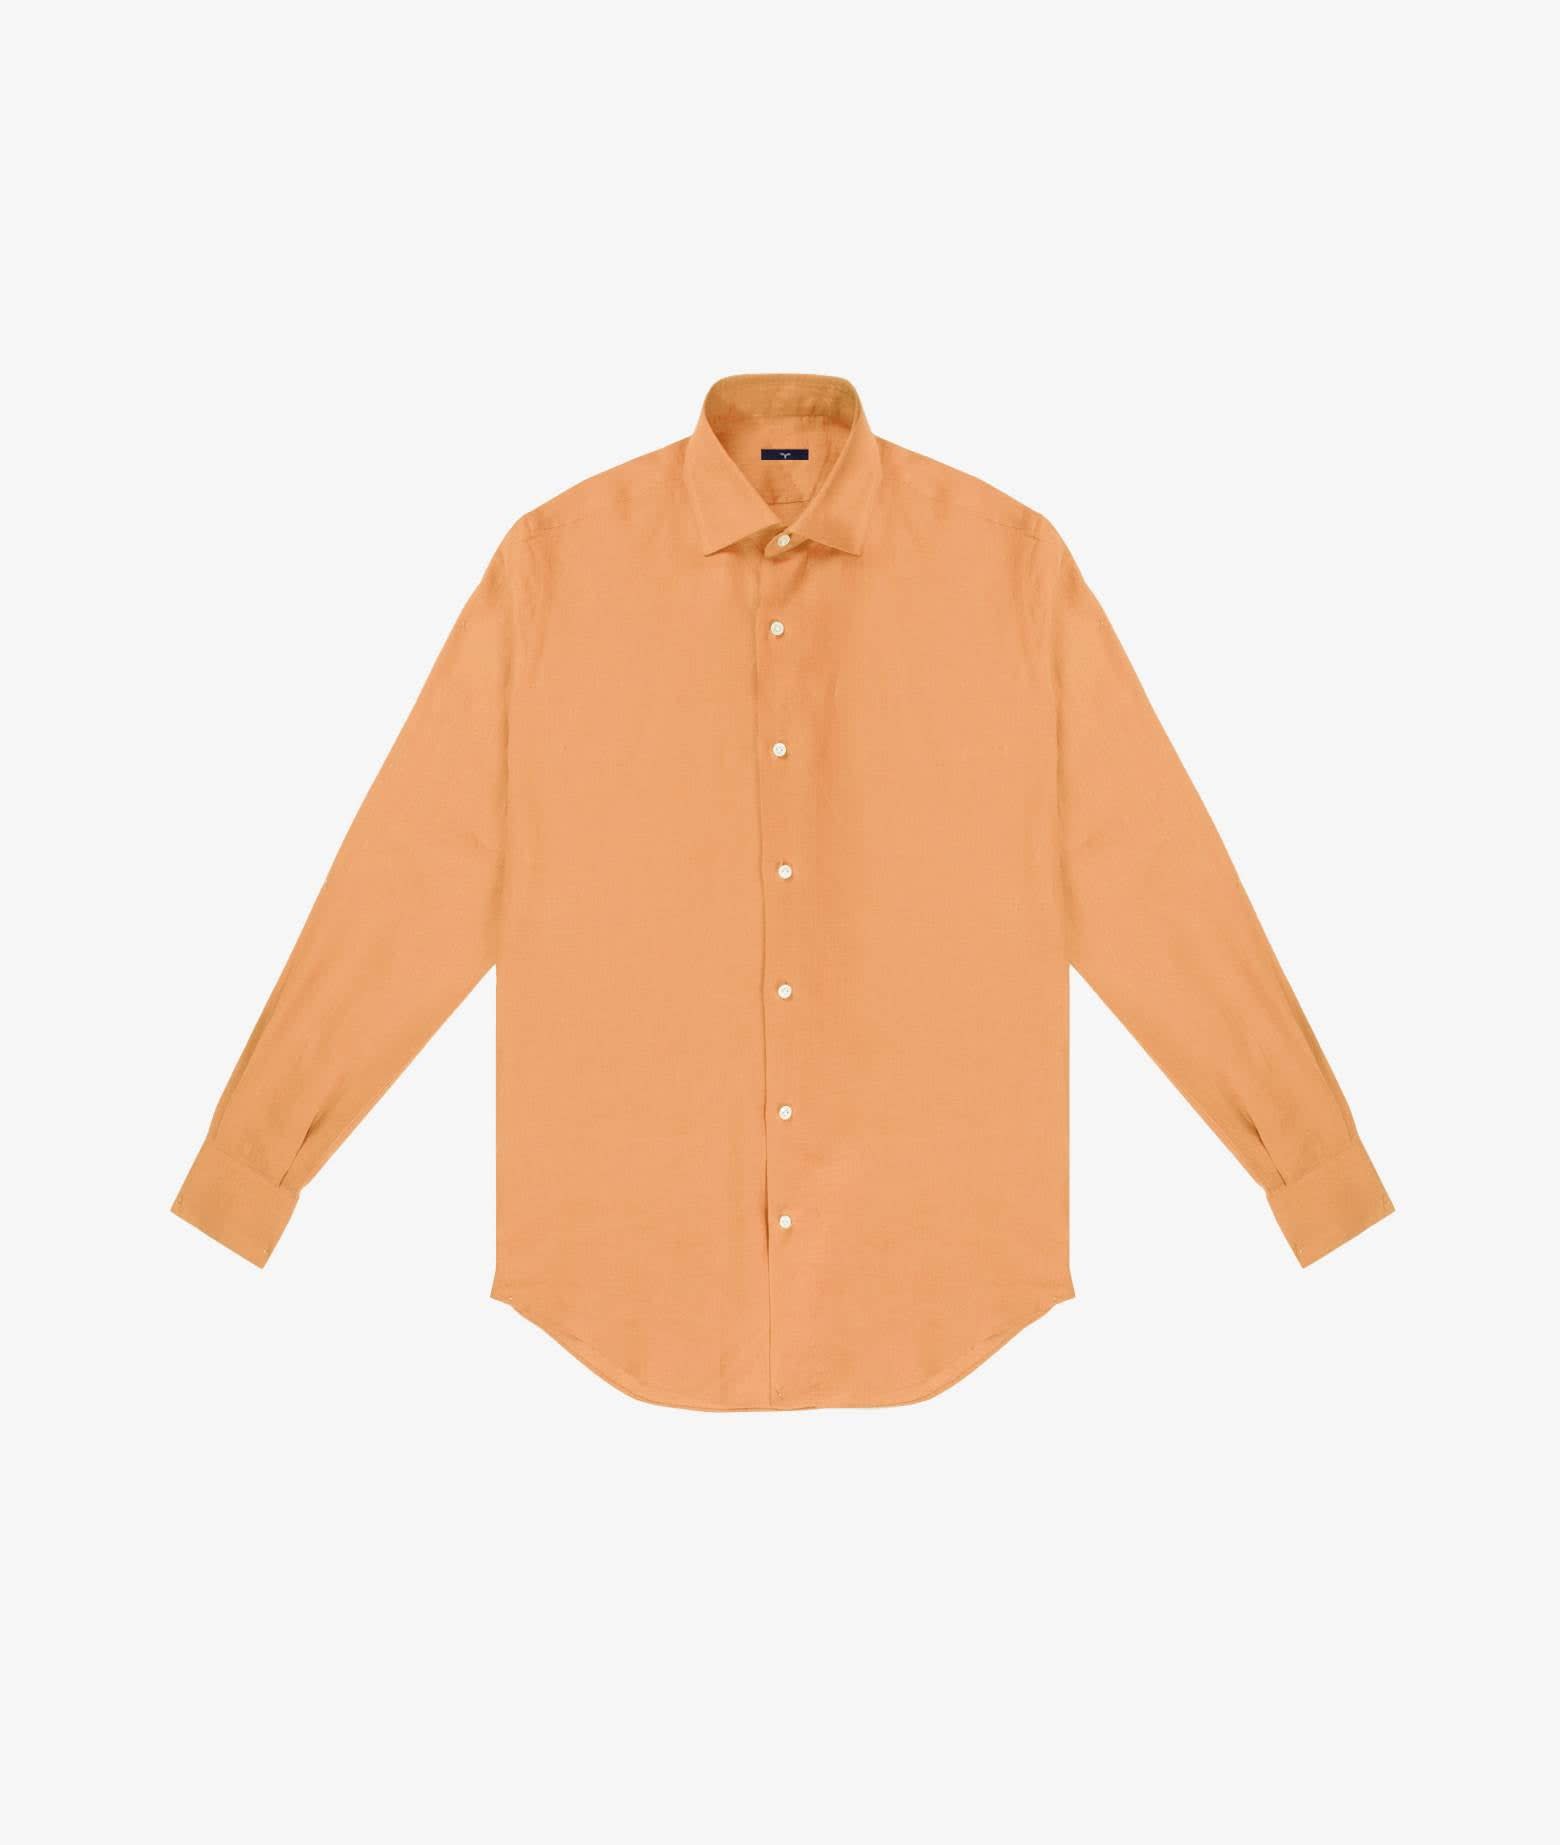 Larusmiani Handmade Shirt Mayfair Shirt In Orange